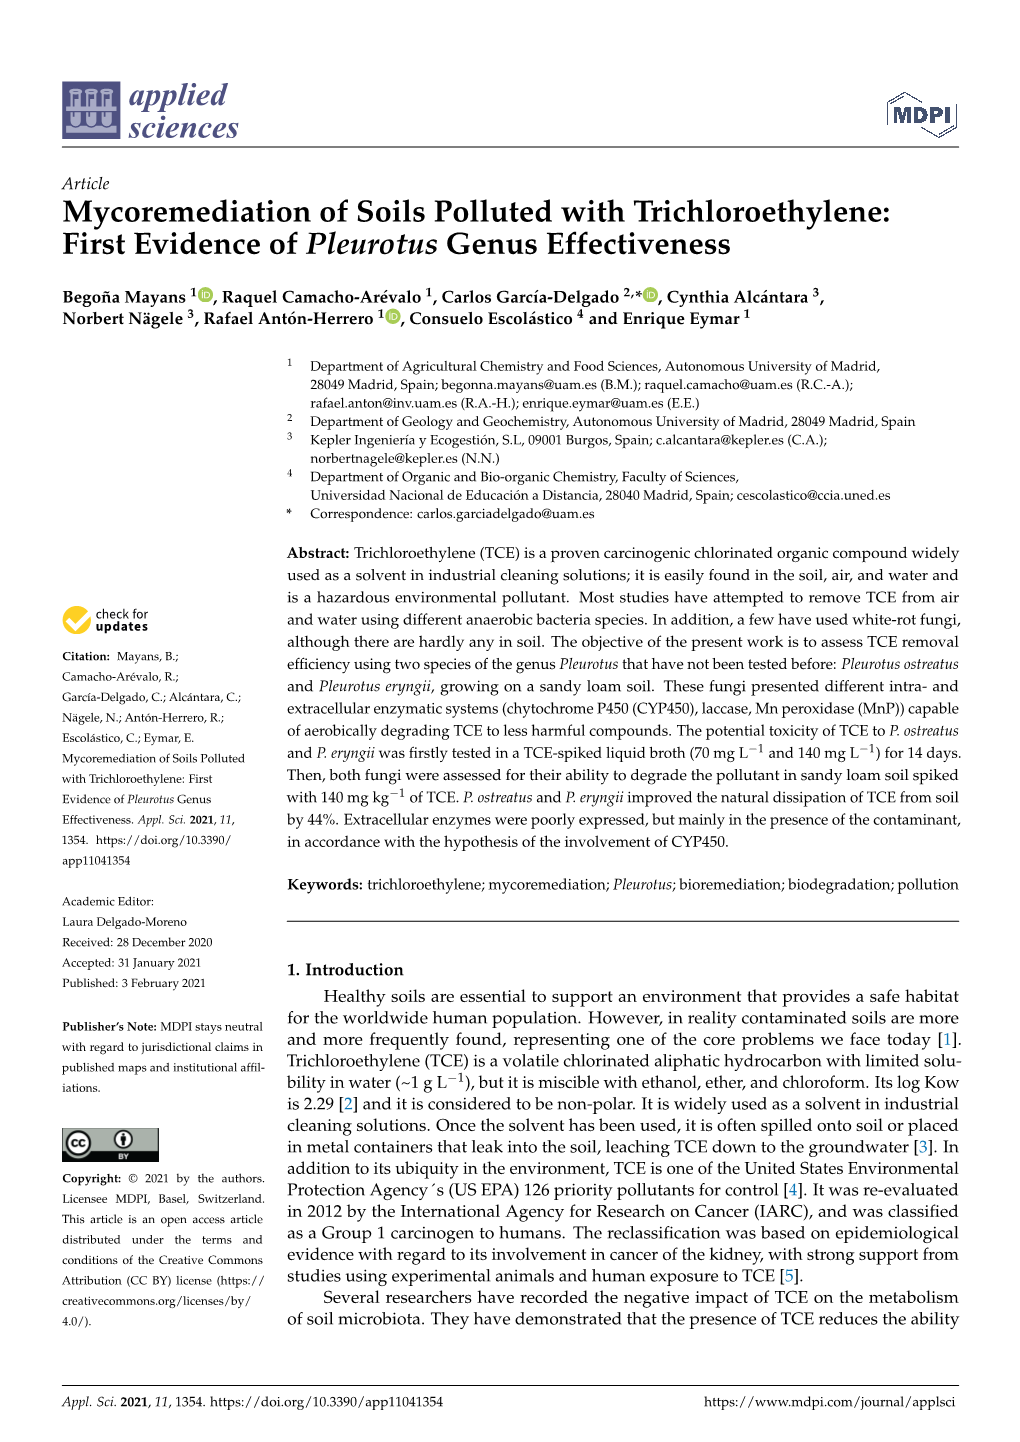 Mycoremediation of Soils Polluted with Trichloroethylene: First Evidence of Pleurotus Genus Effectiveness